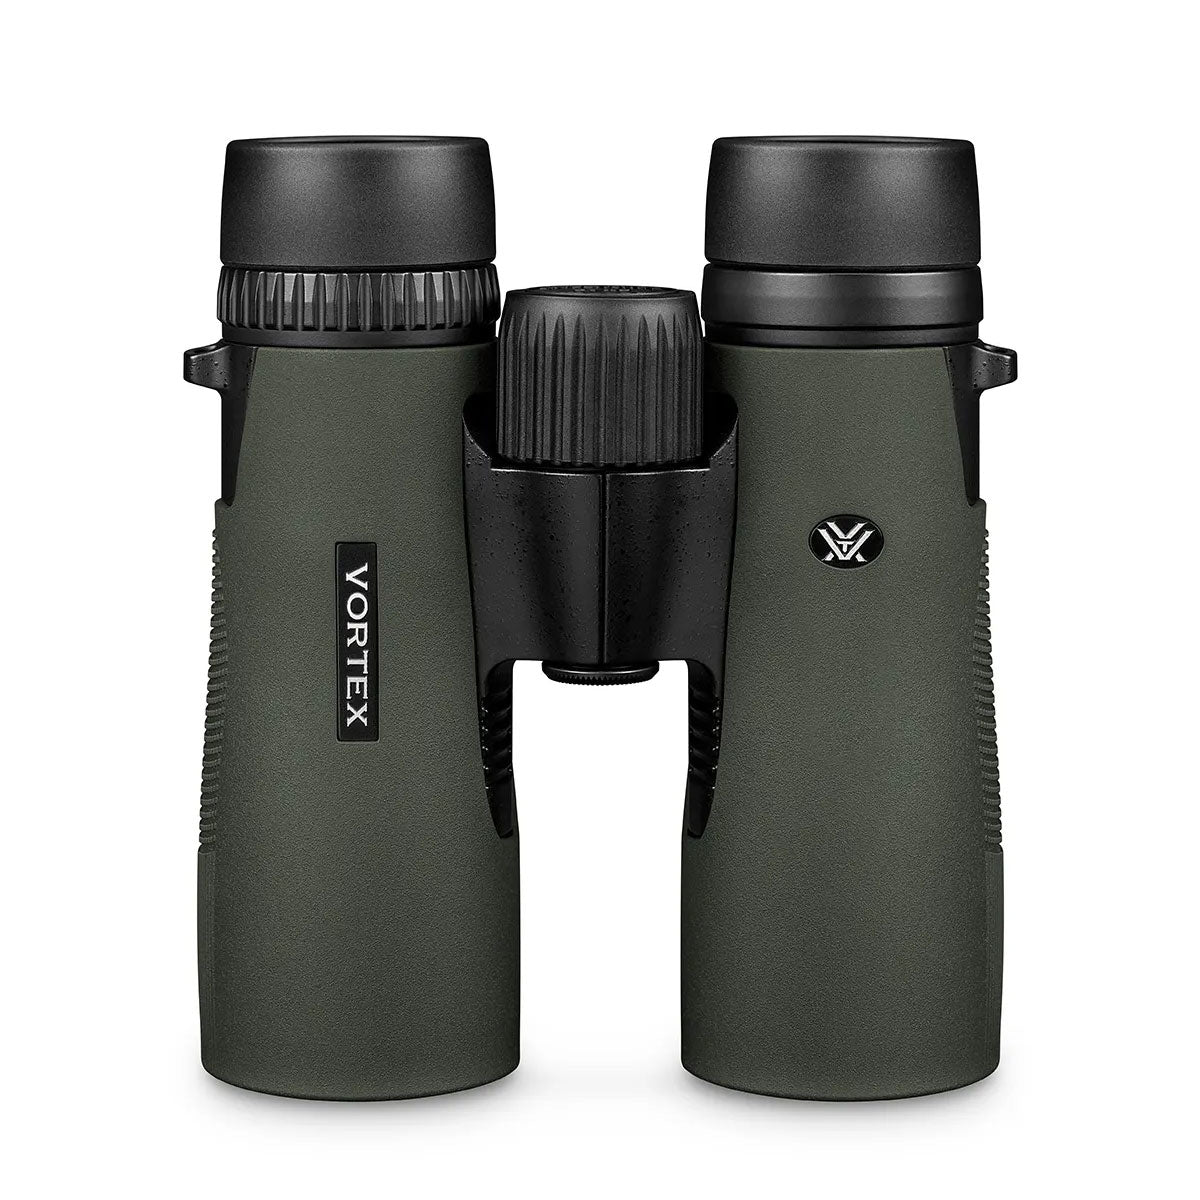 Vortex Diamondback HD 8x42 Binocular buy online from red mills outdoor pursuits ireland kilkenny